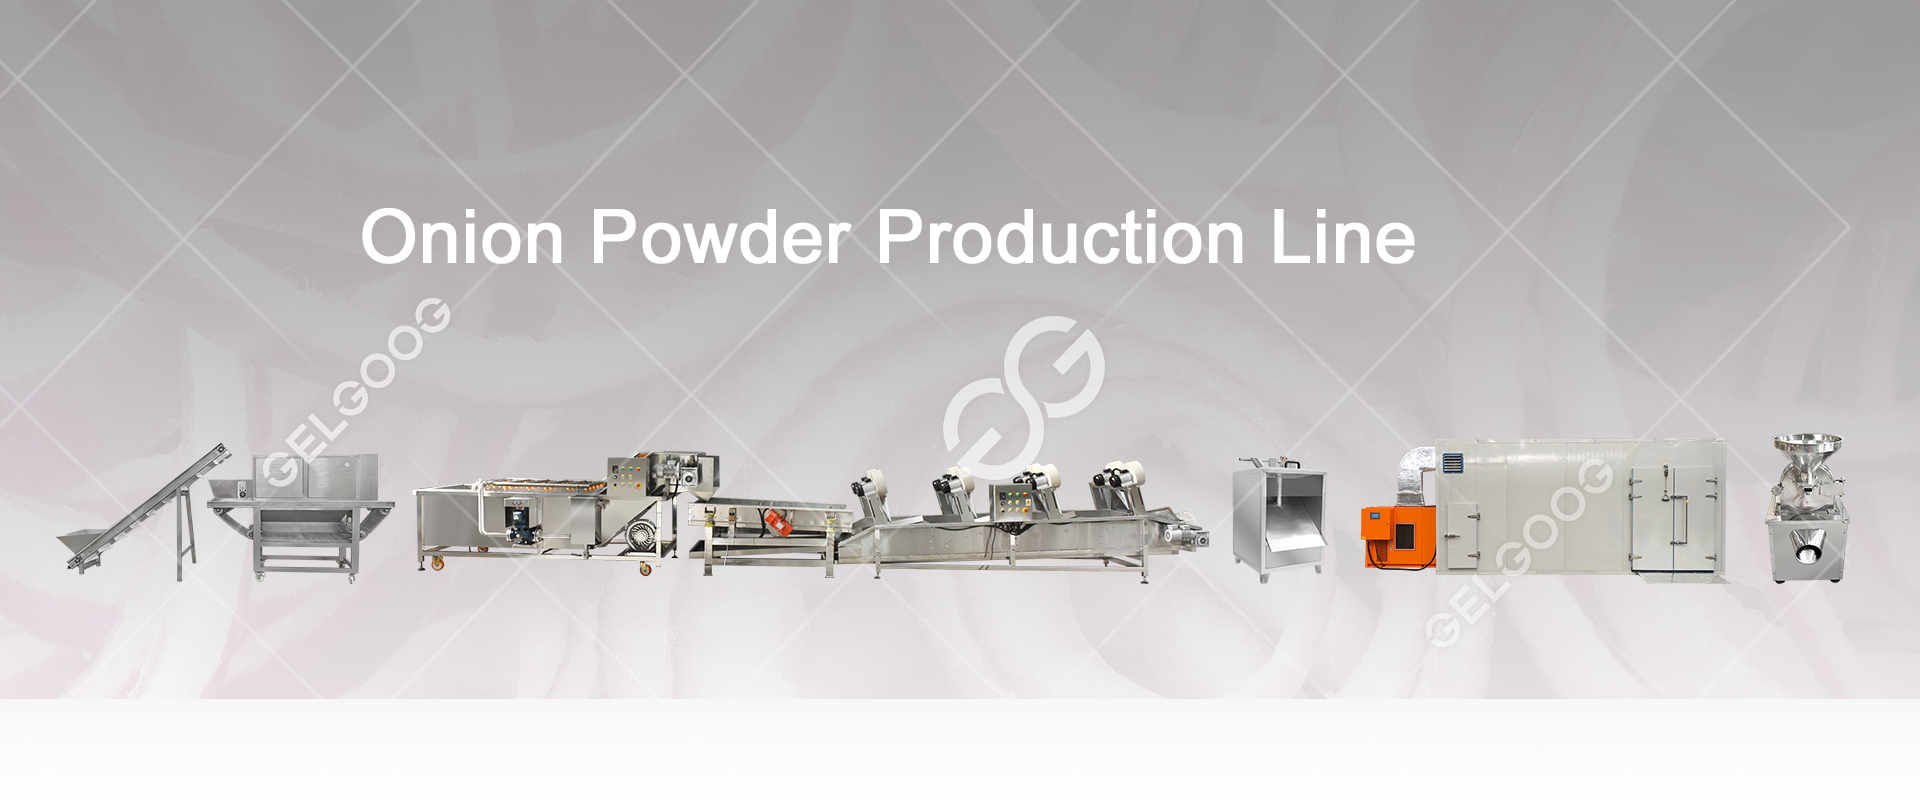 onion powder Production Line